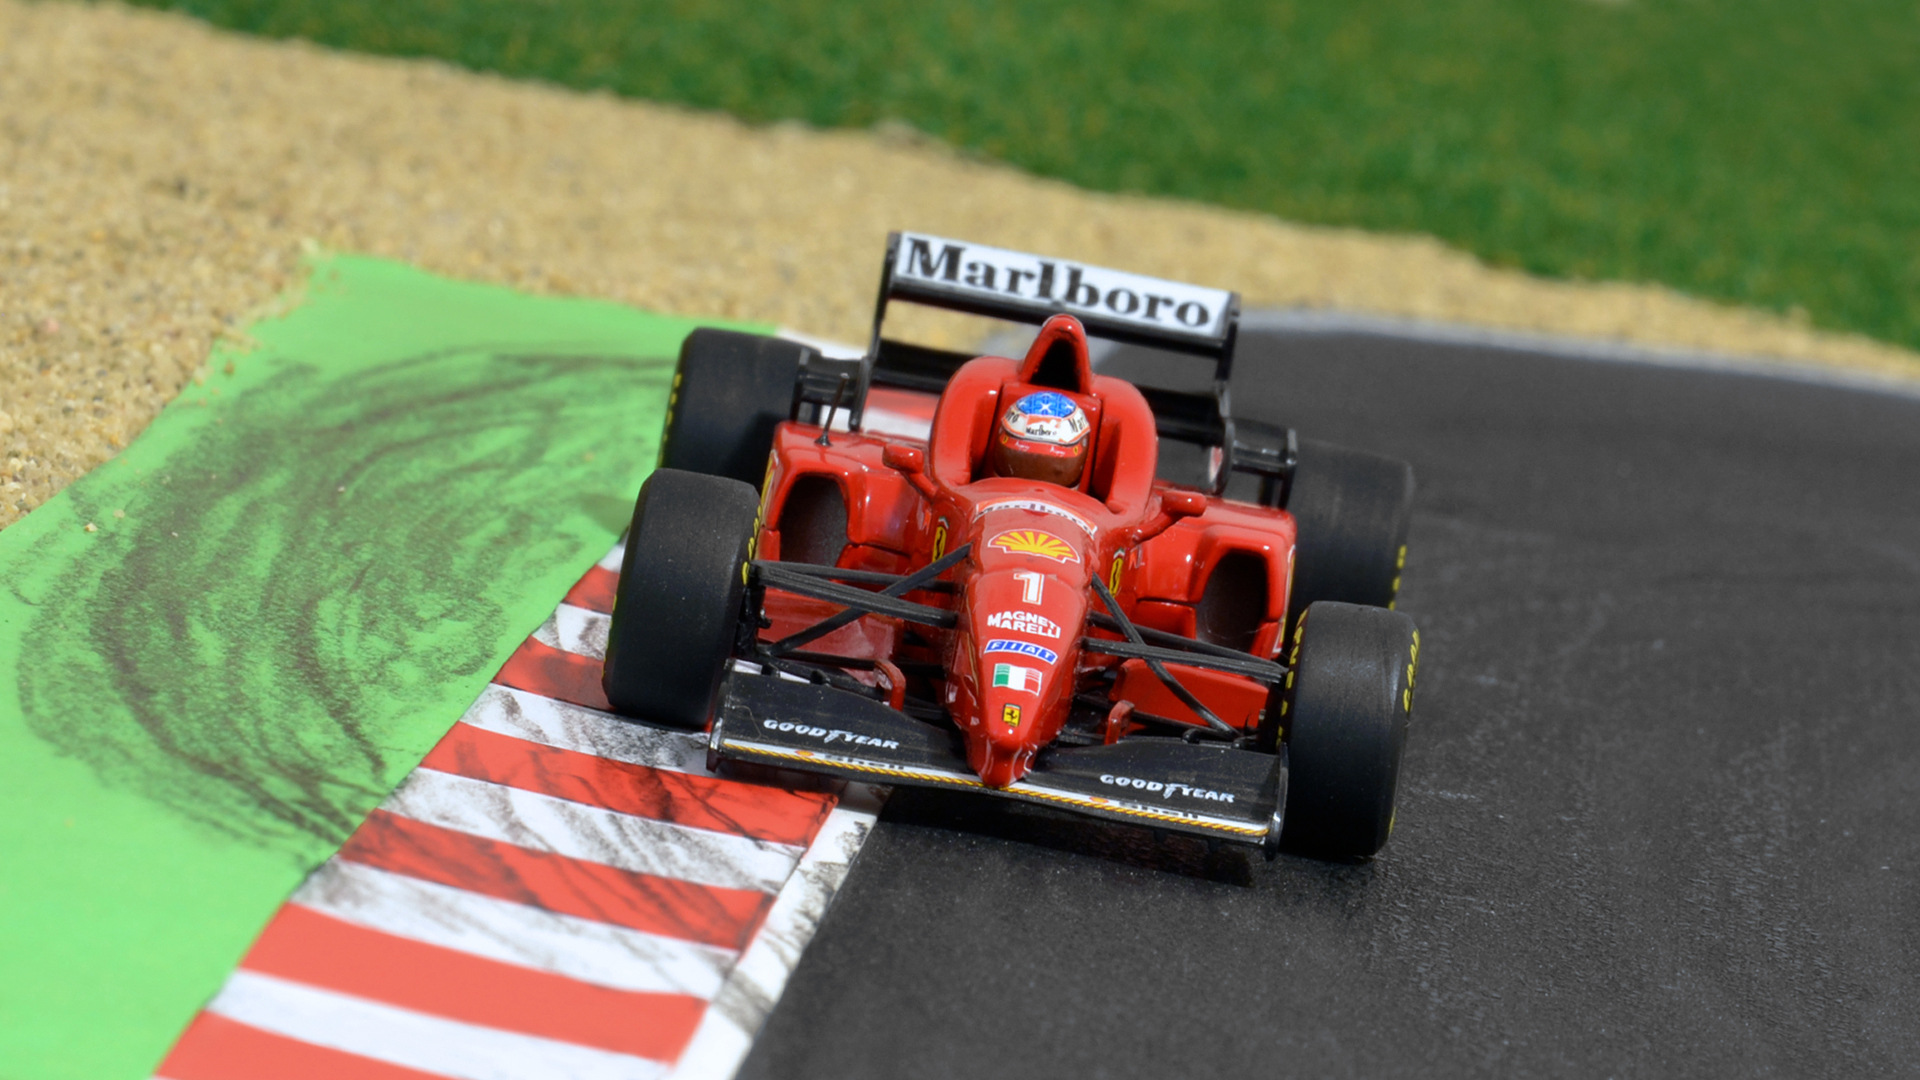 Ferrari 310 Michael Schumacher 1996 - Minichamps 1:43